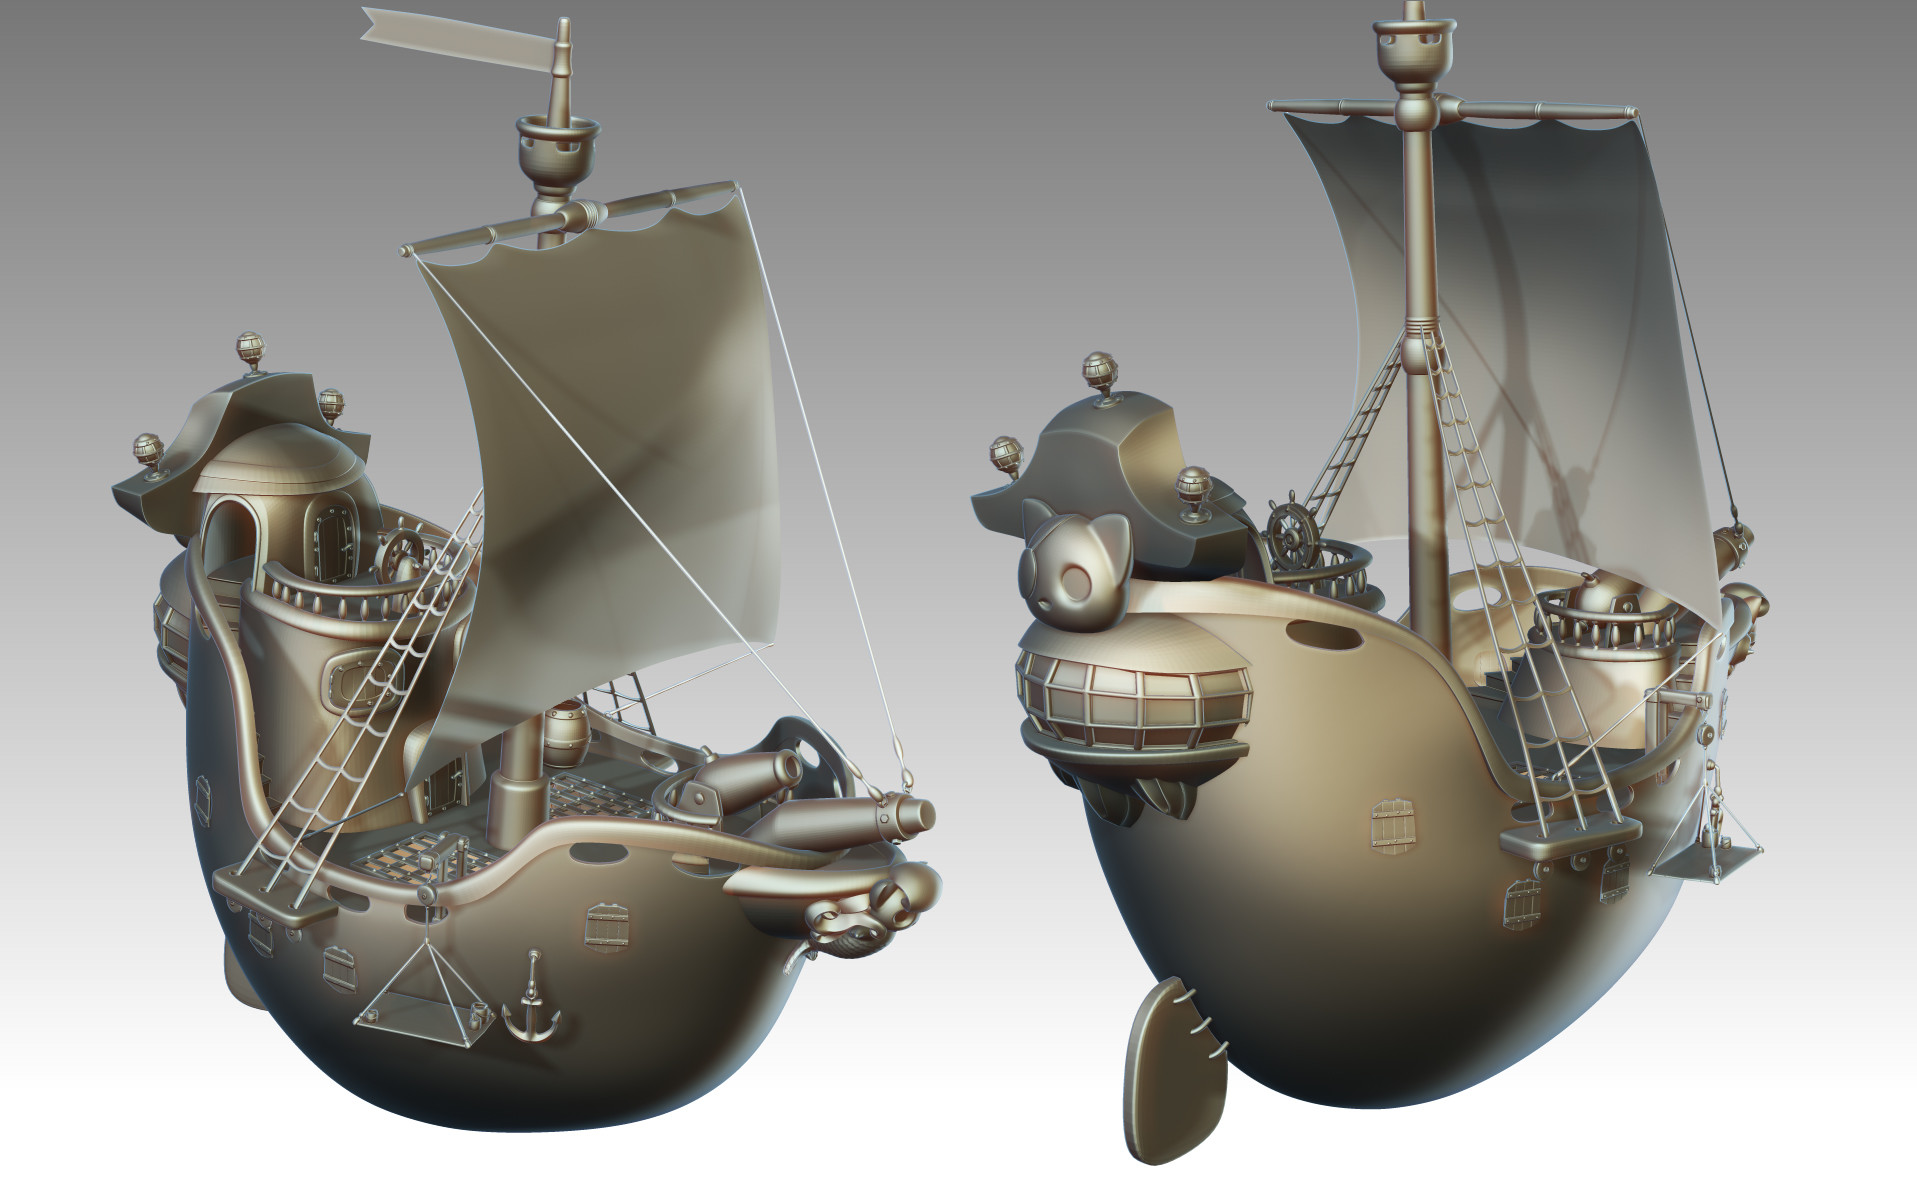 Cartoon pirate ship